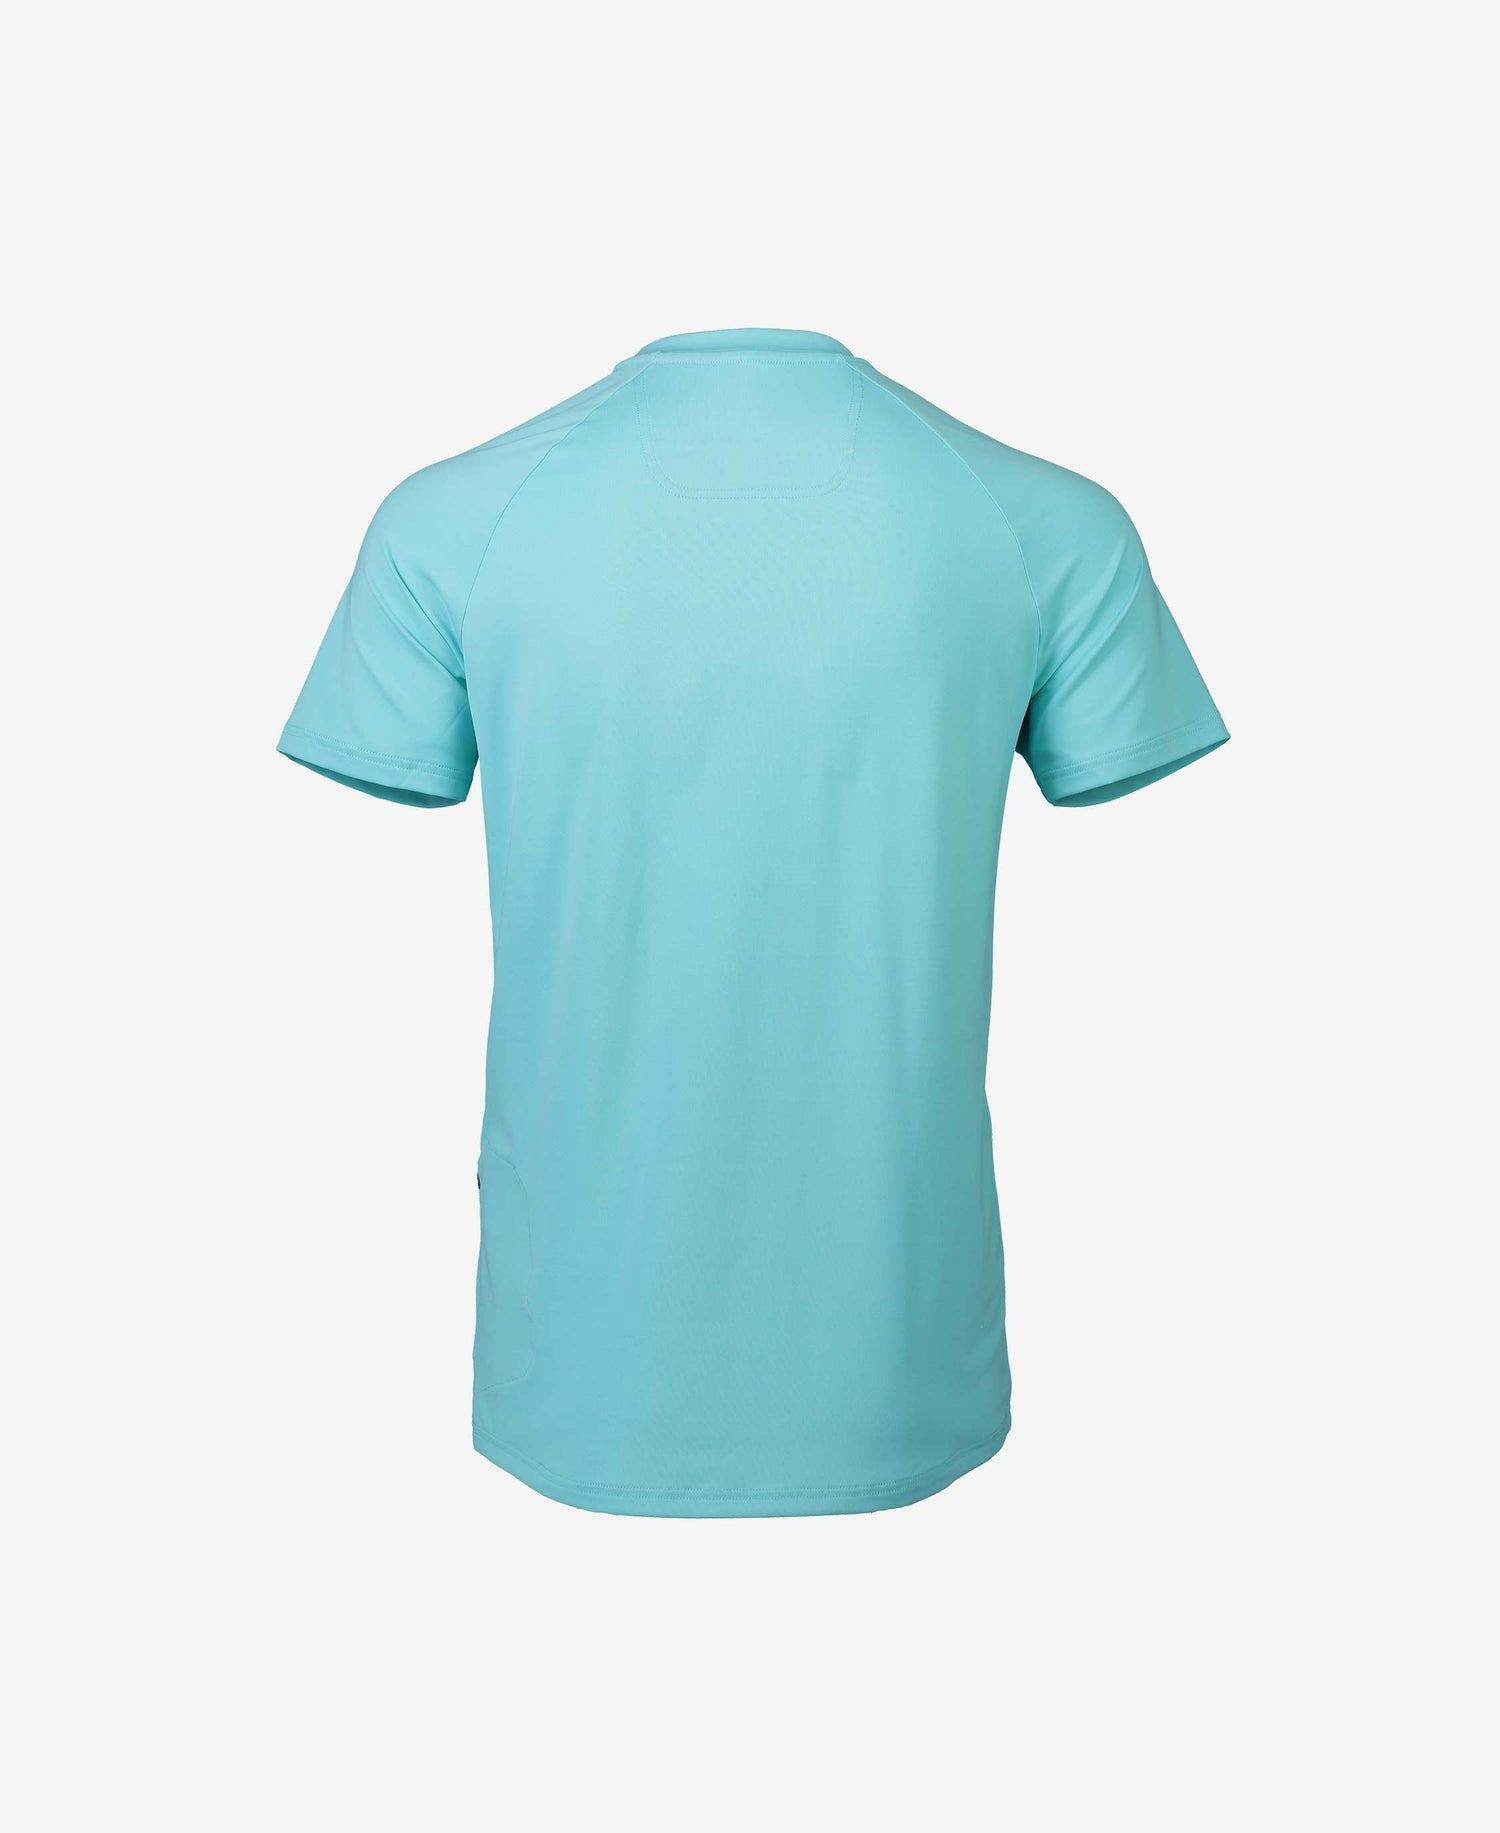 Tシャツ Essential Enduro Tee - Light Kalkopyrit Blue [ユニセックス] 52840-1579 - STYLE BIKE ONLINE SHOP